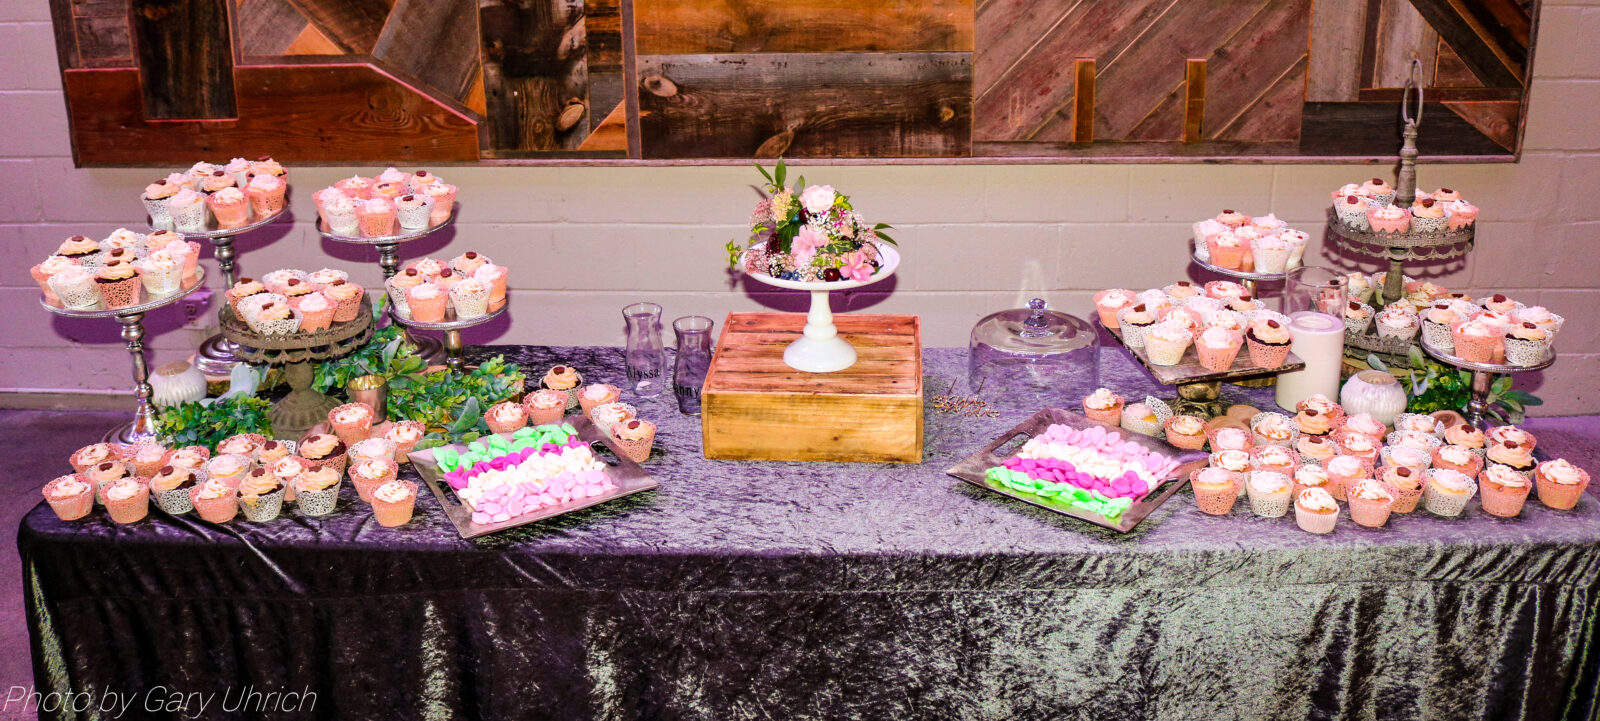 Wedding Cake, Cupcakes, Mints, Cake Display, Decor